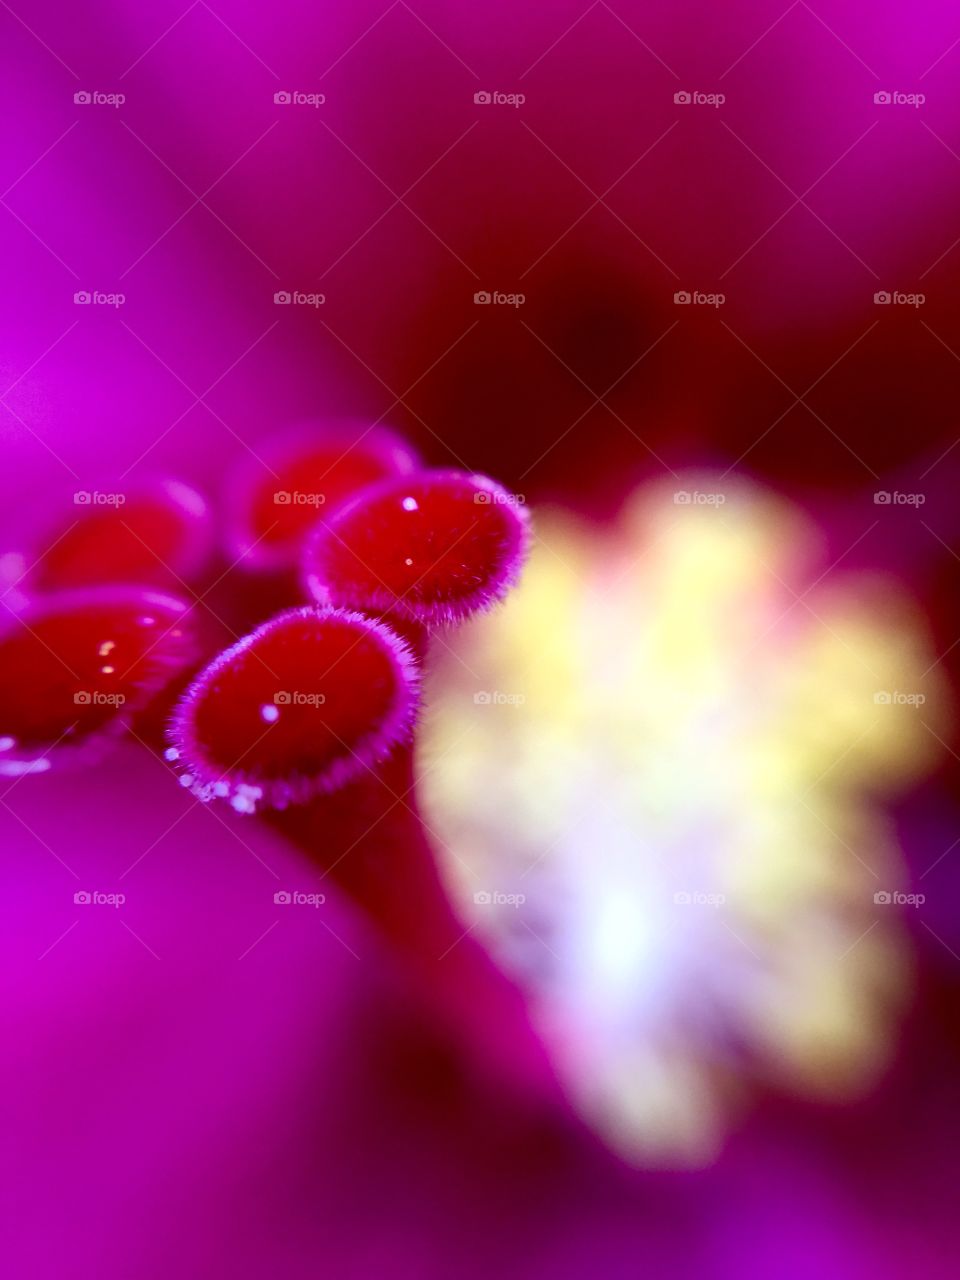 Extreme close up of a pink/purple flower's pistil.